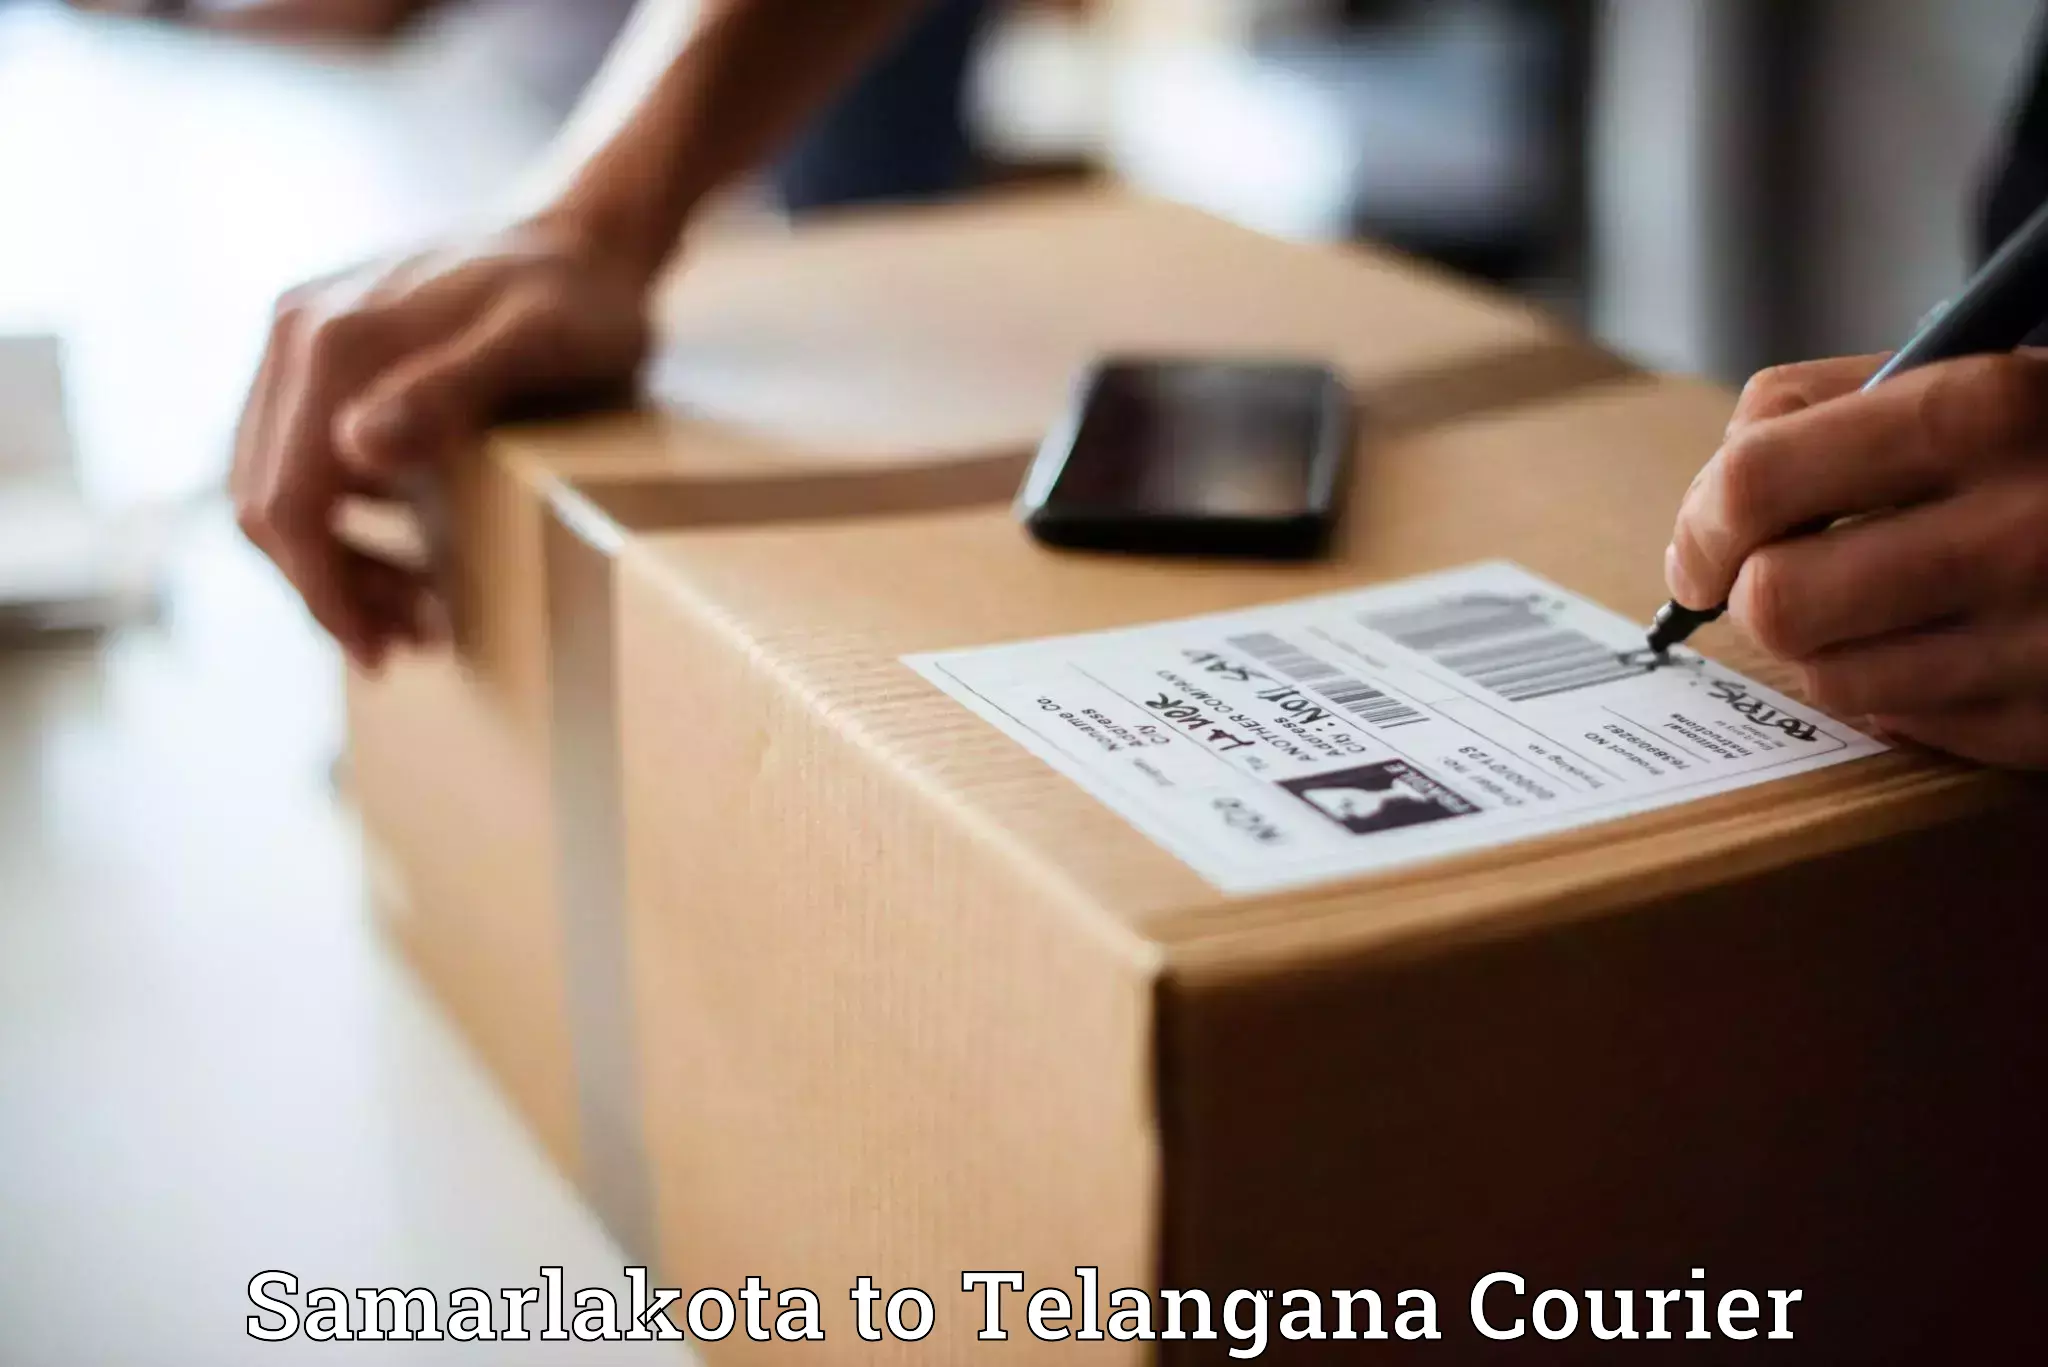 Next-day delivery options Samarlakota to Secunderabad